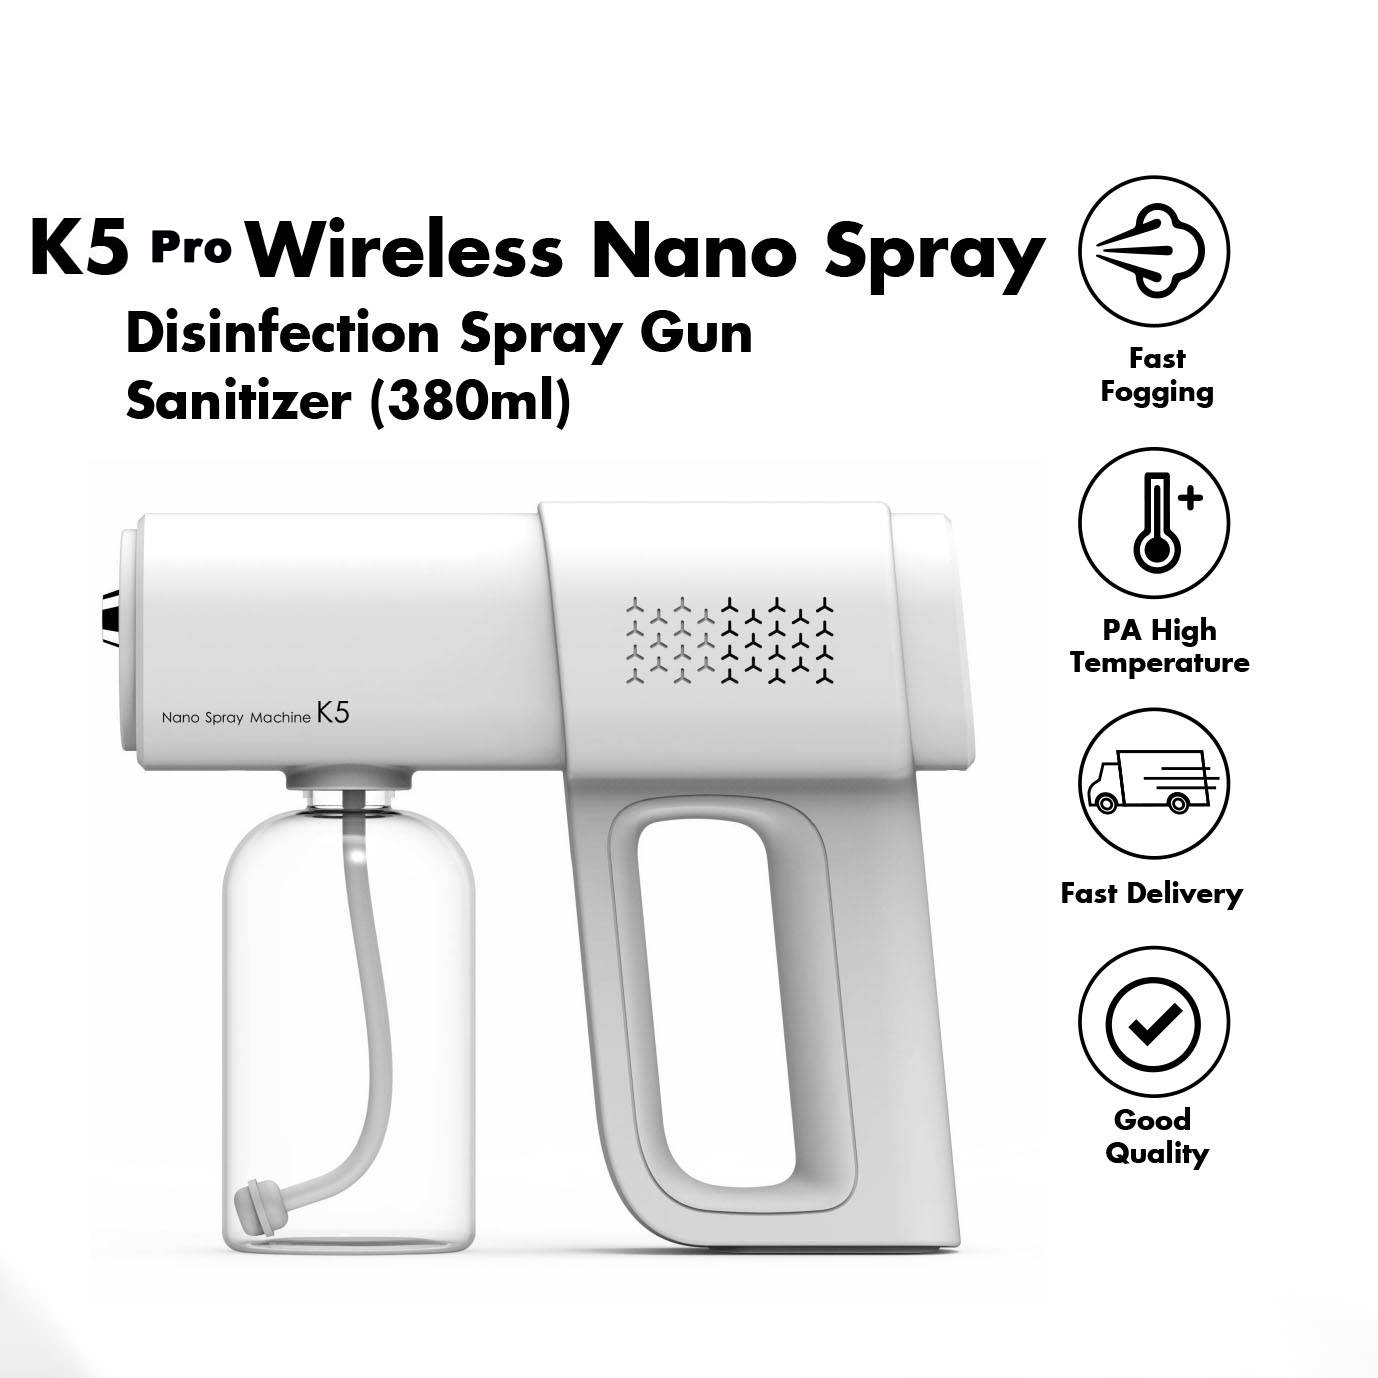 K5 nano spray gun